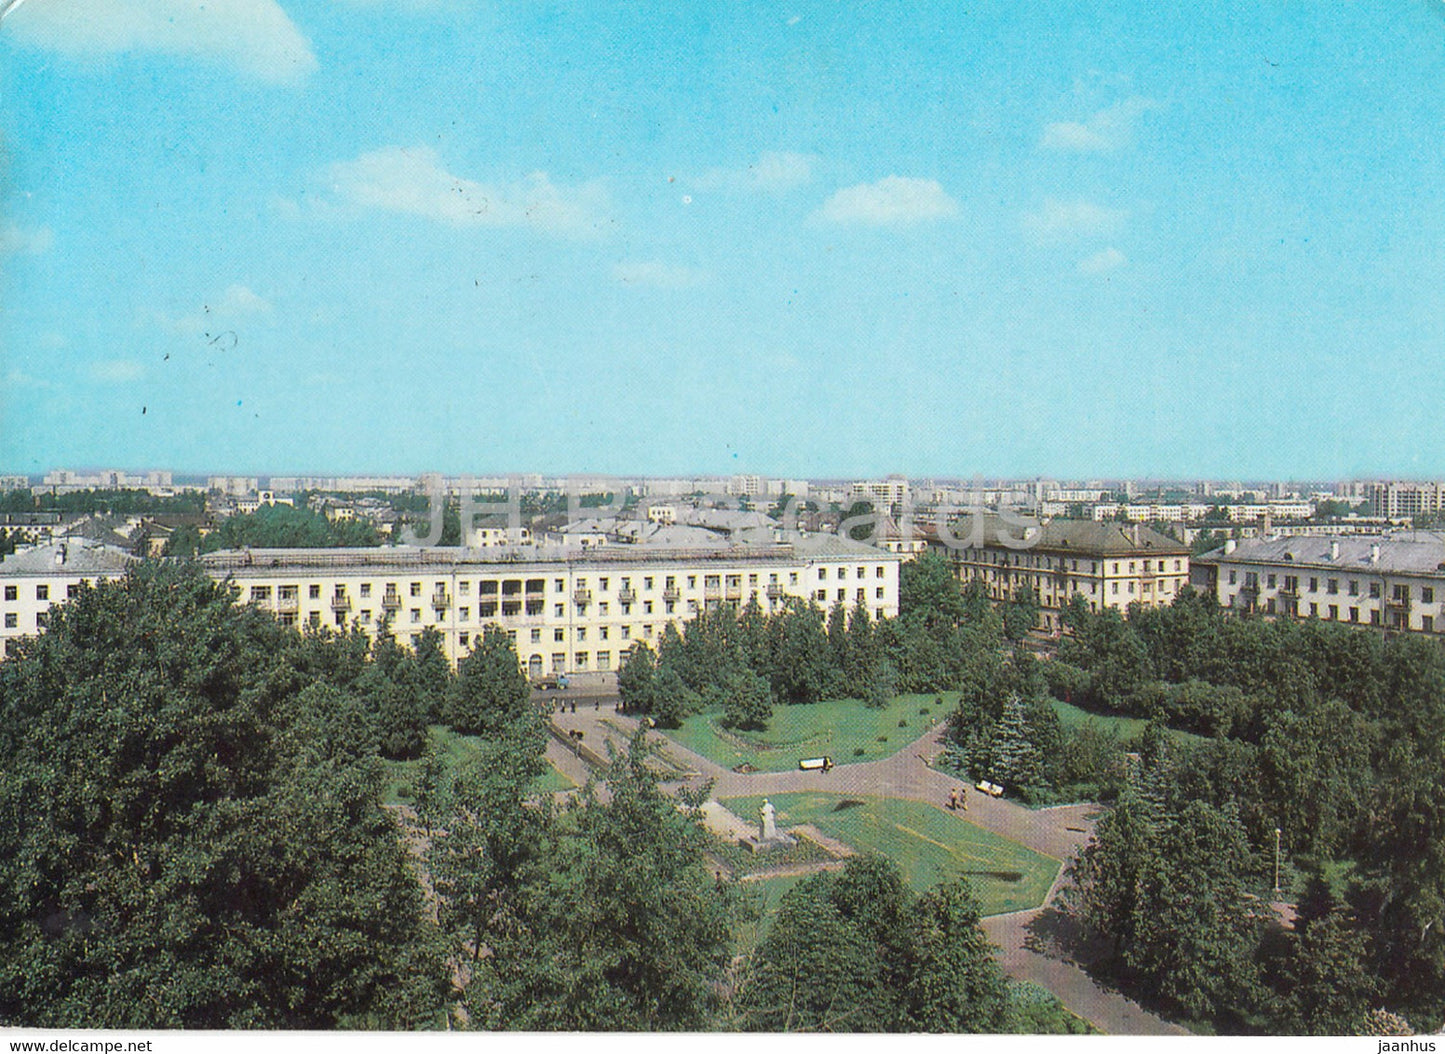 Novgorod - hotel Volkhov - postal stationery - 1984 - Russia USSR - used - JH Postcards